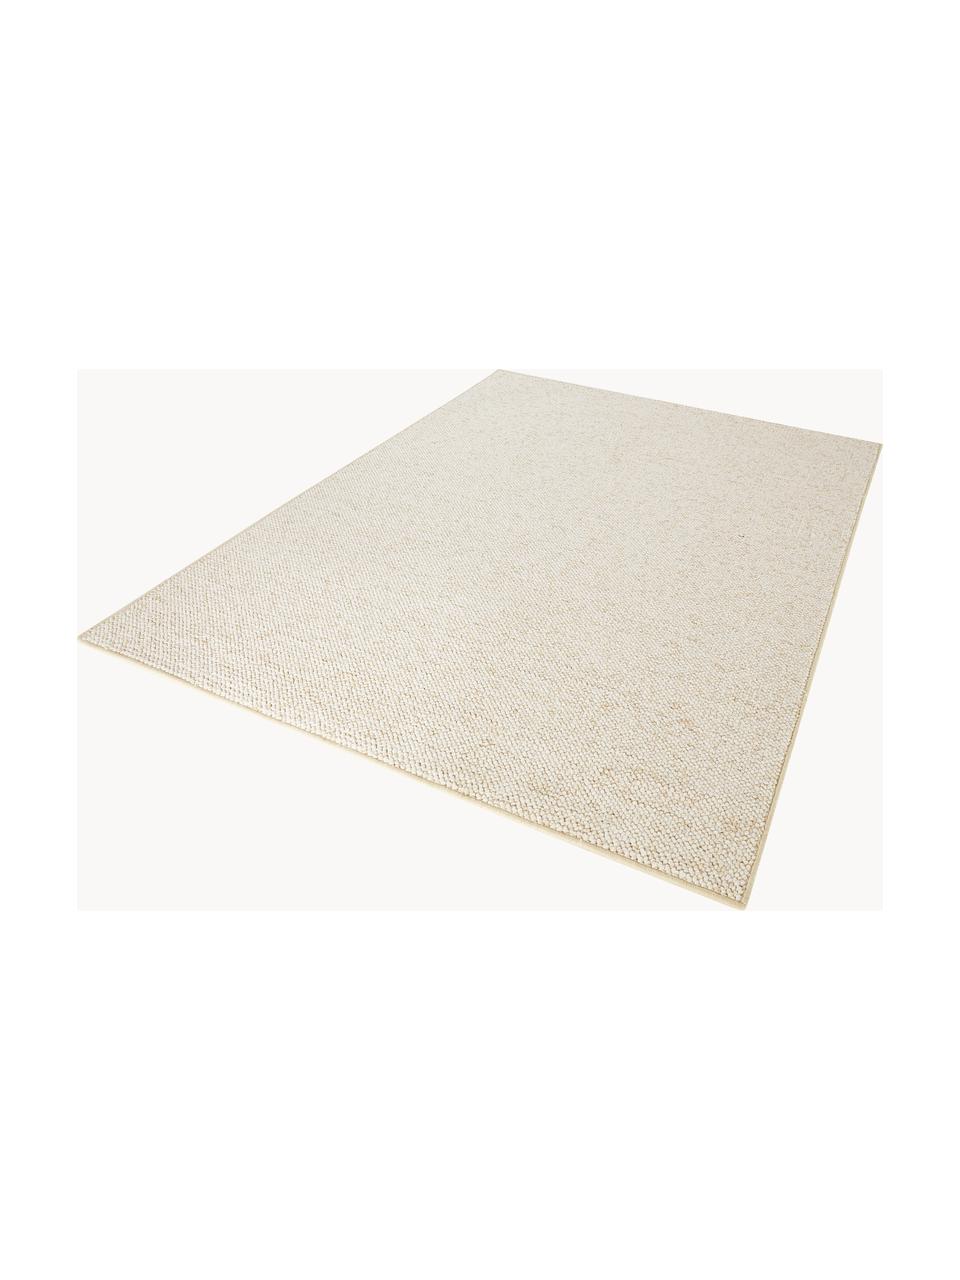 Teppich Lyon mit Schlingen-Flor, Flor: 100 % Polypropylen, Cremeweiss, B 140 x L 200 cm (Grösse S)